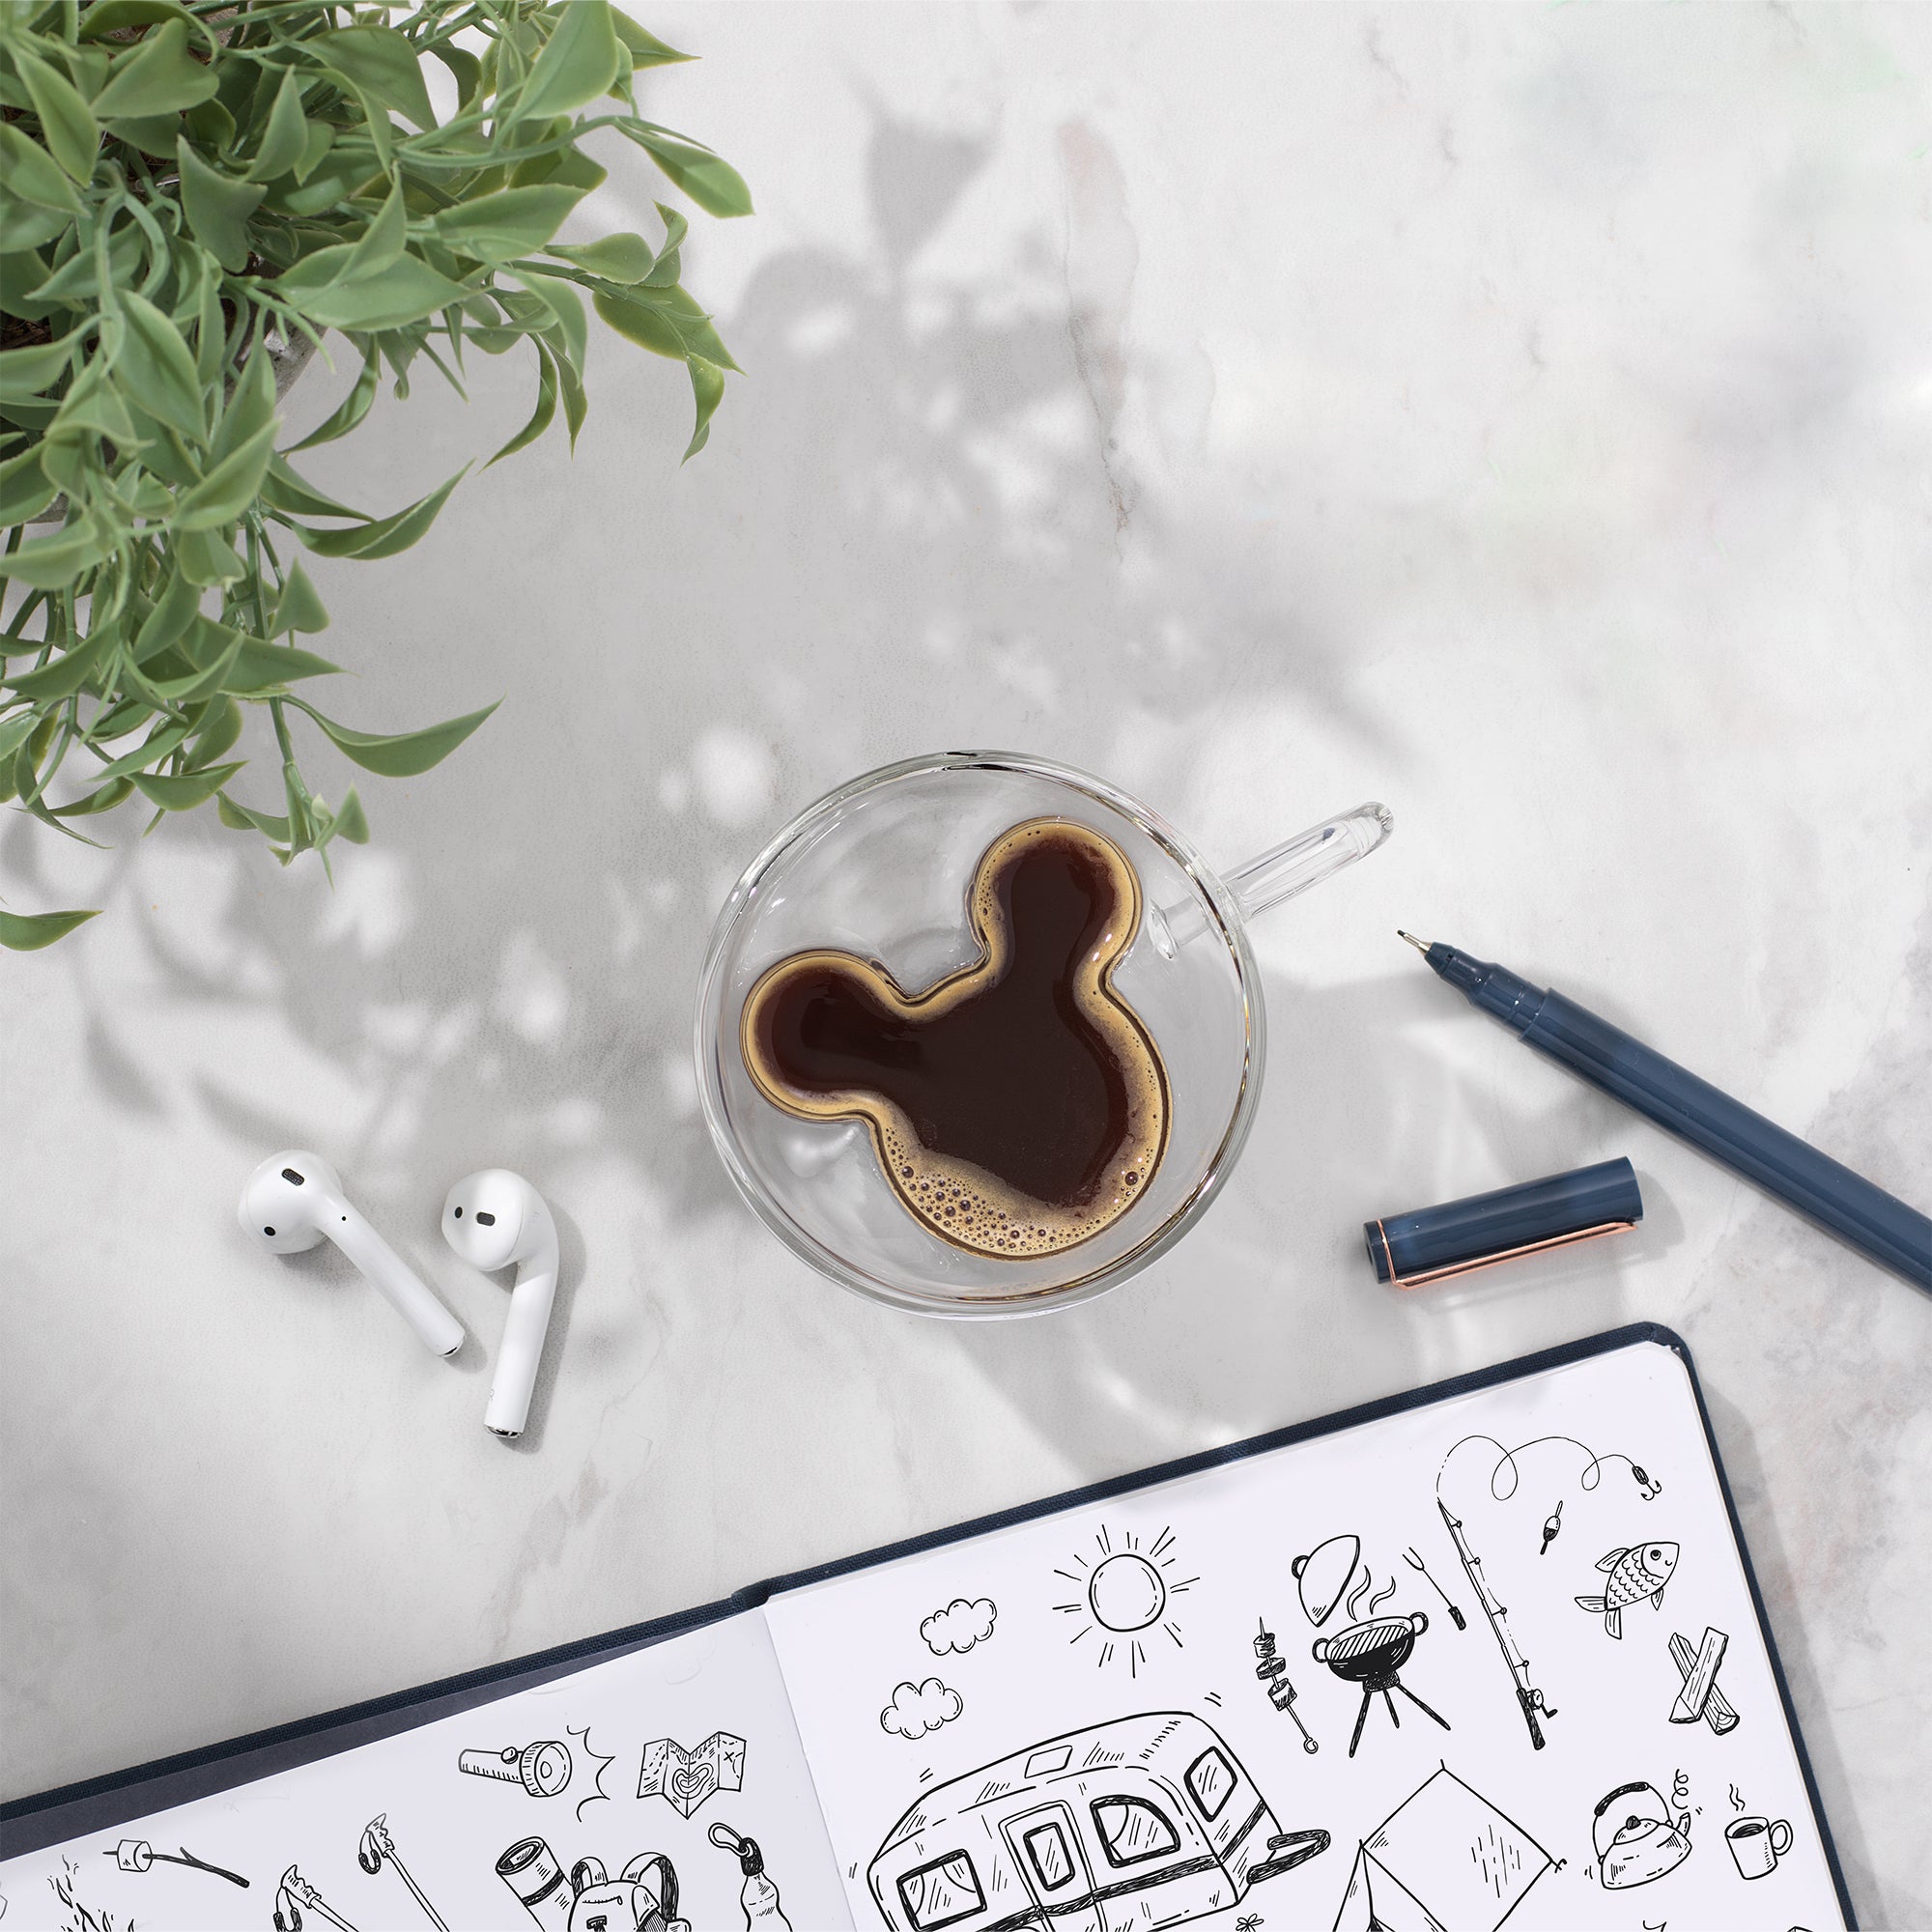 Disney Mickey Mouse 3D Espresso Cups